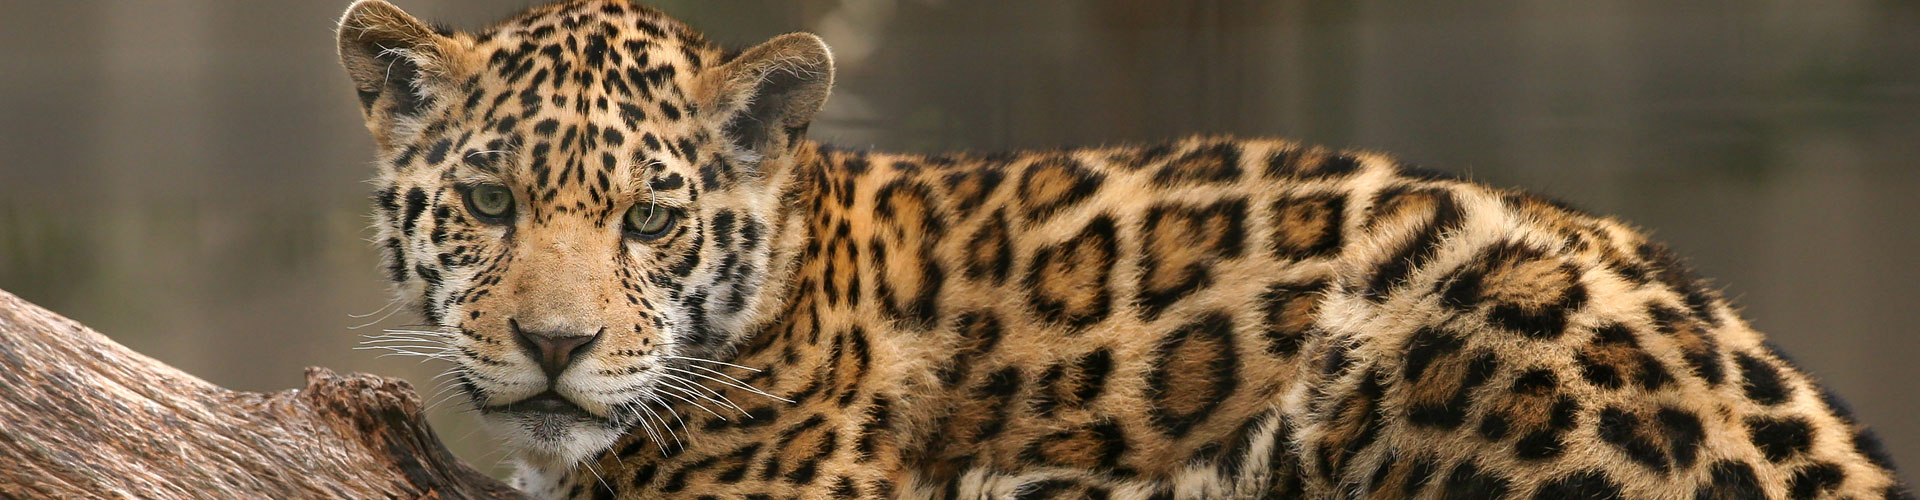 Jaguar cub on a tree - Amazon sacred headwaters